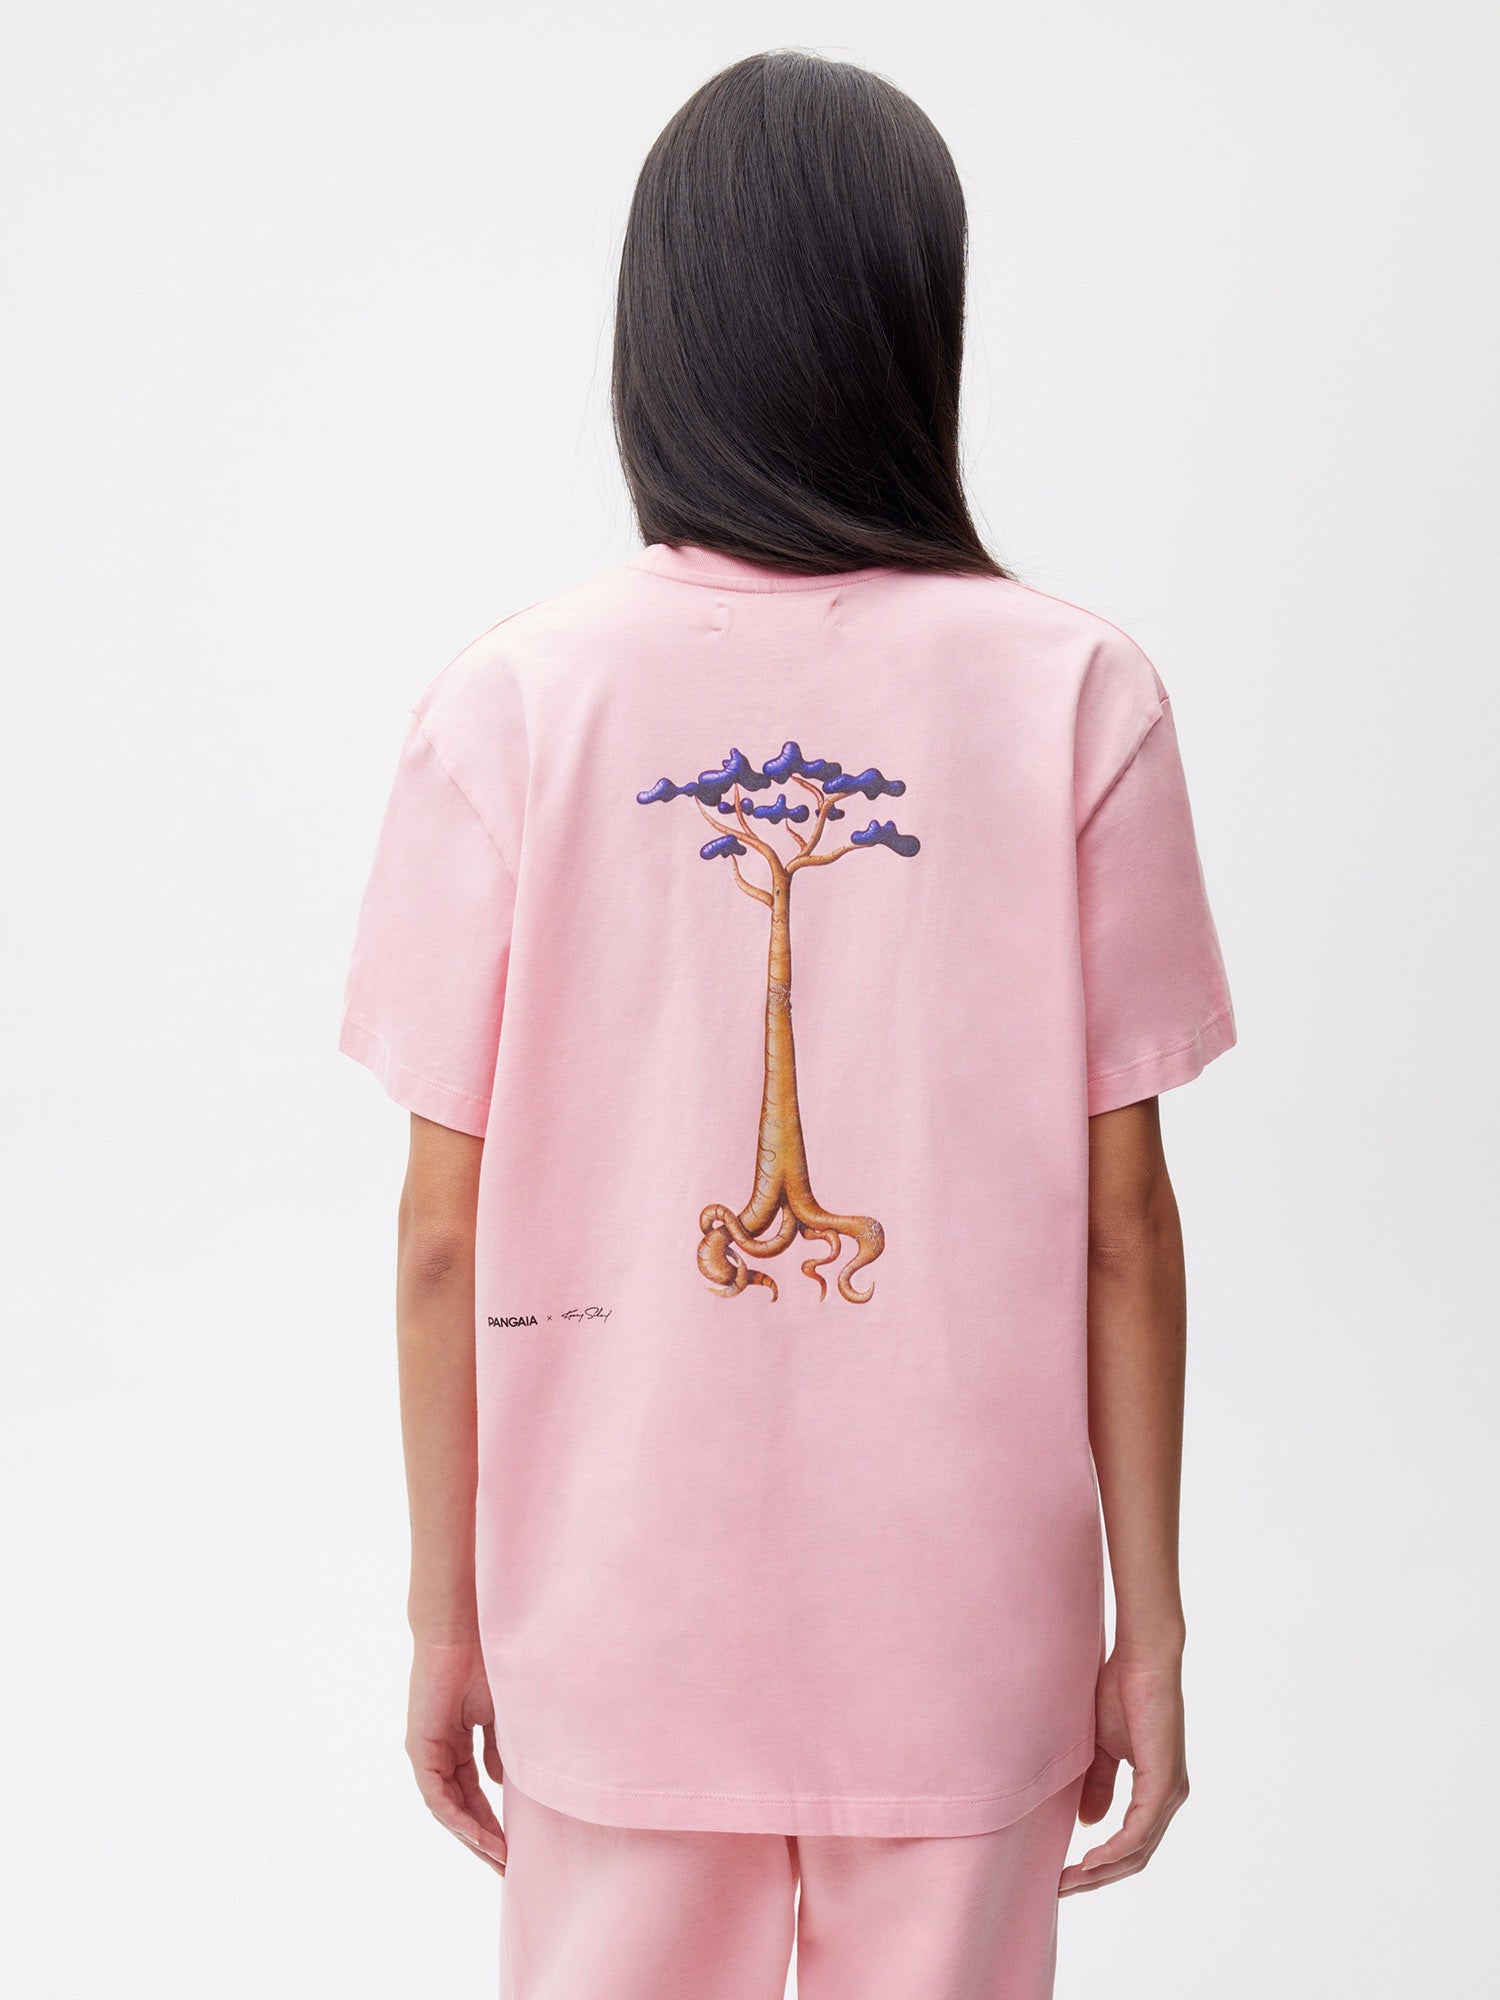 Pangaia-Kenny-Scharf-Organic-Cotton-T-Shirt-Swamp-Style-Sakura-Pink-Female-2